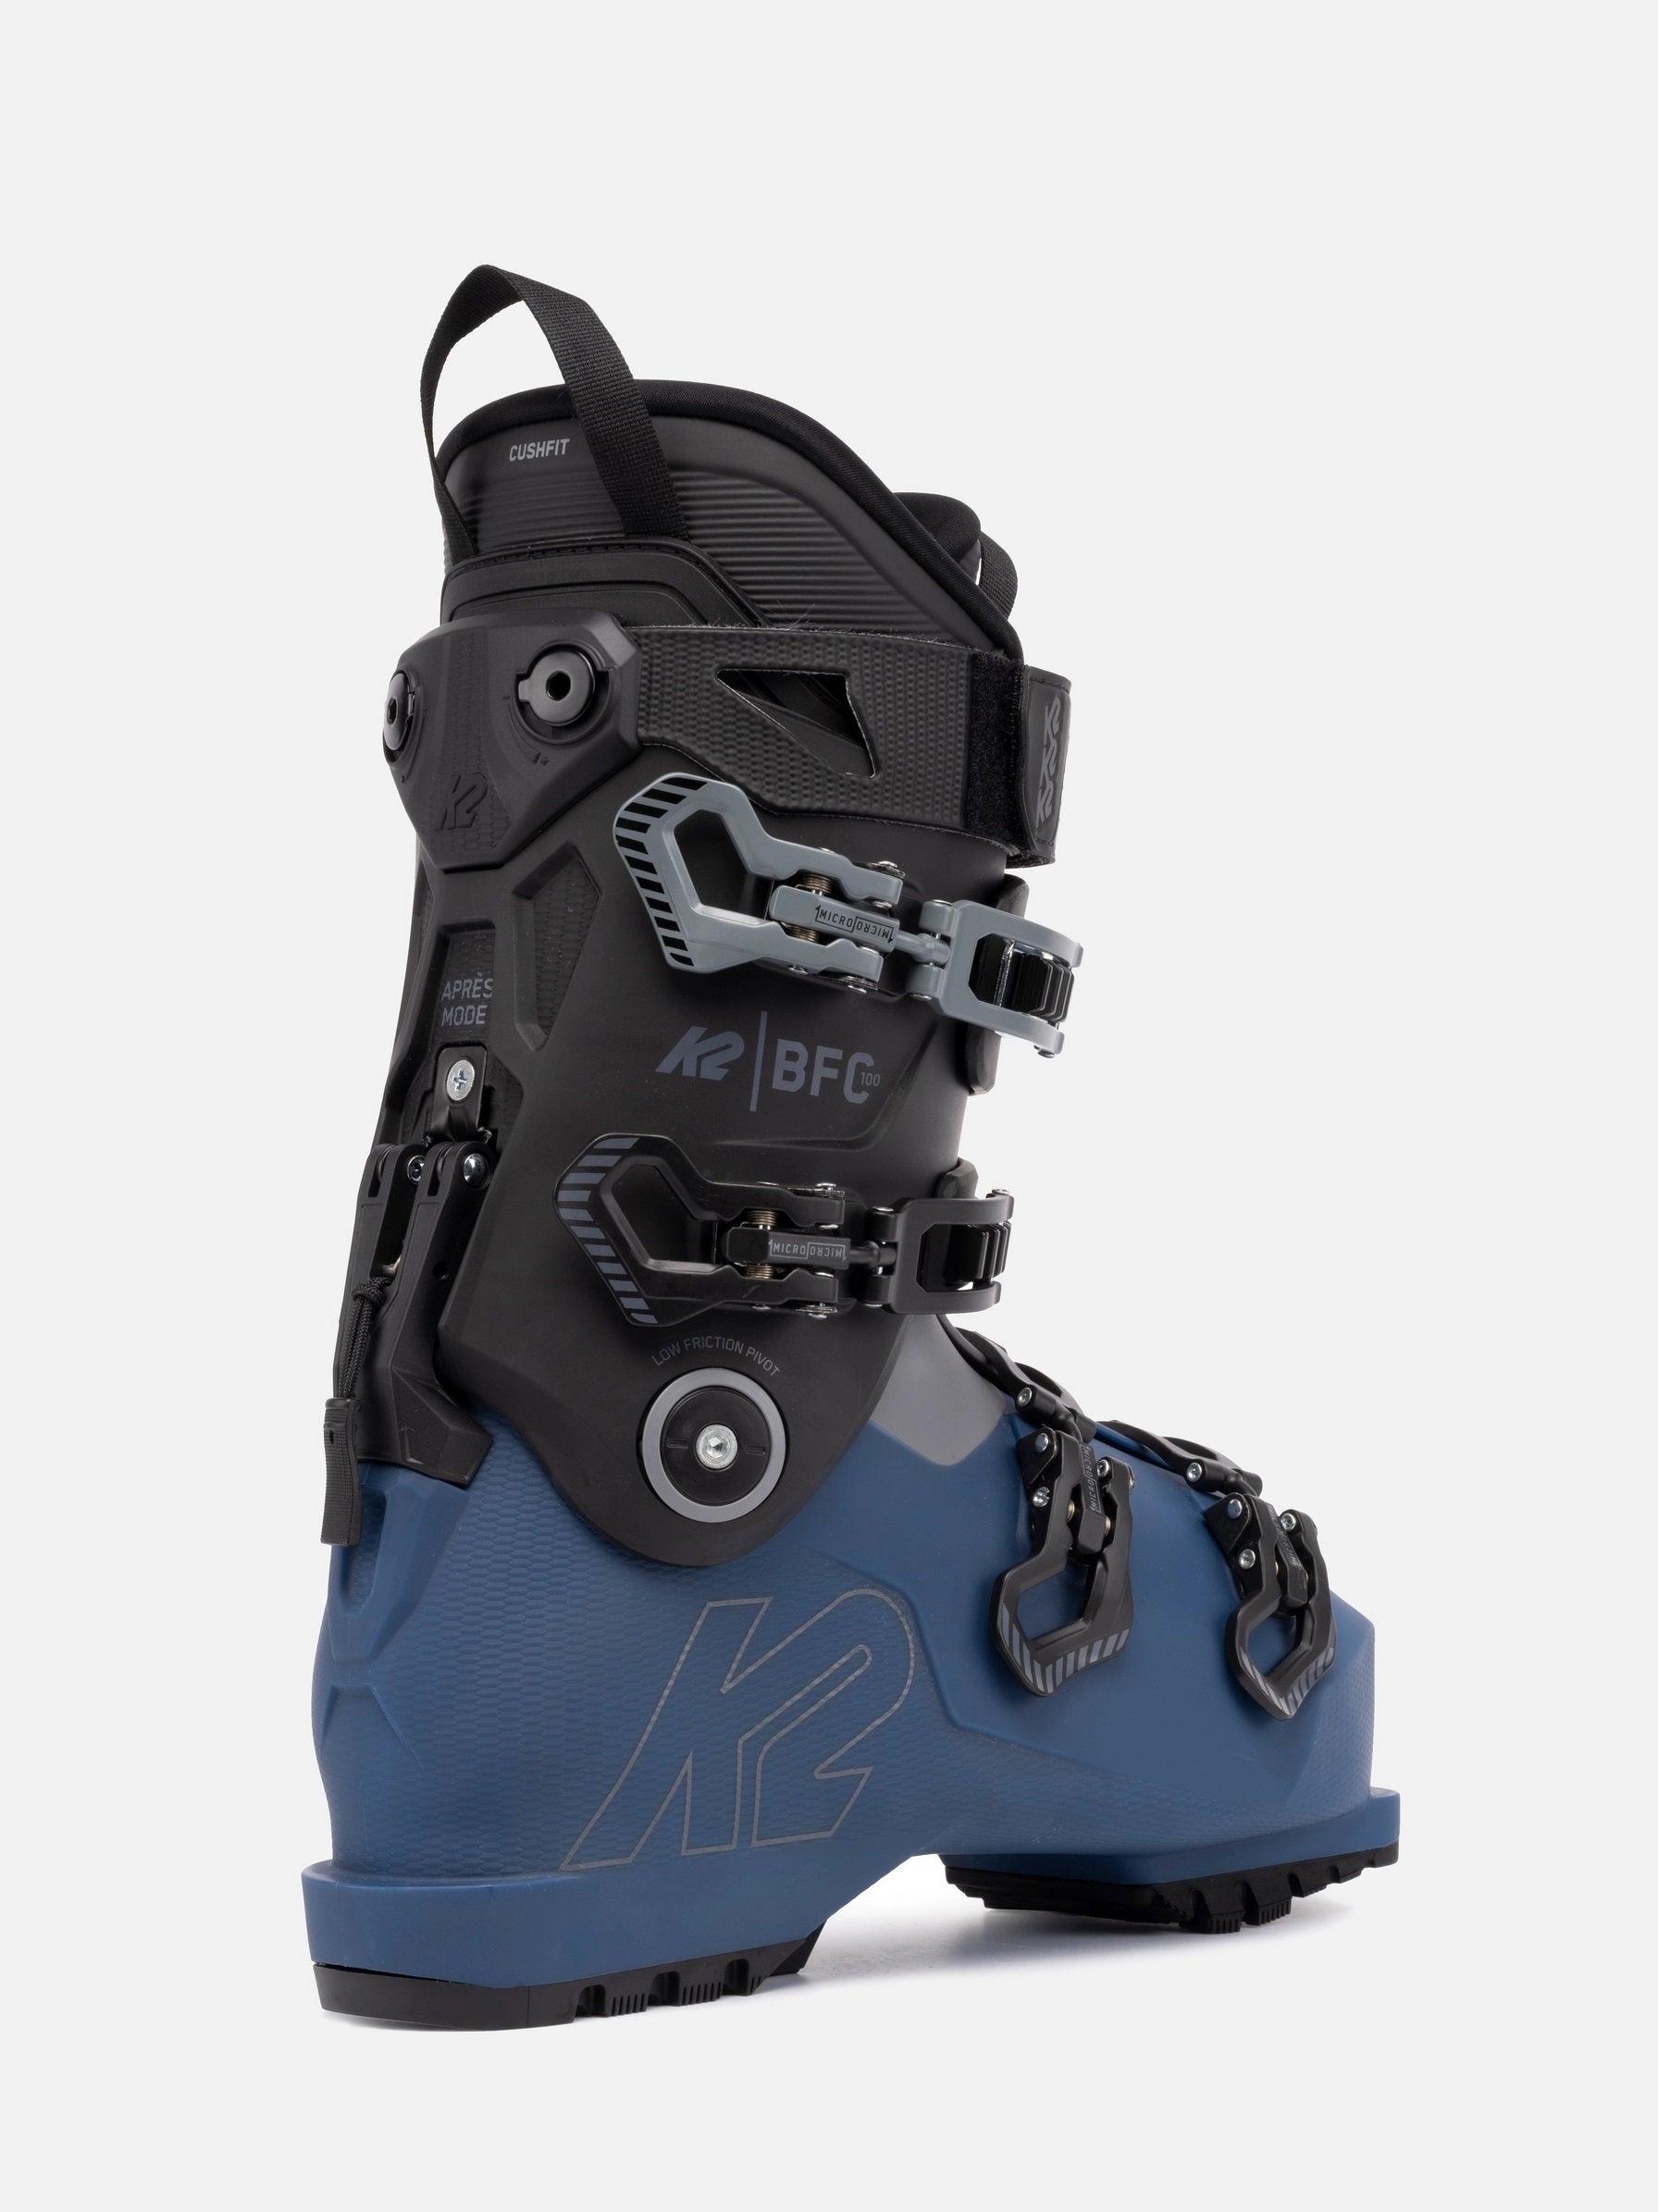 K2 BFC 100 Ski Boots 2022 - Men's - image 2 of 4